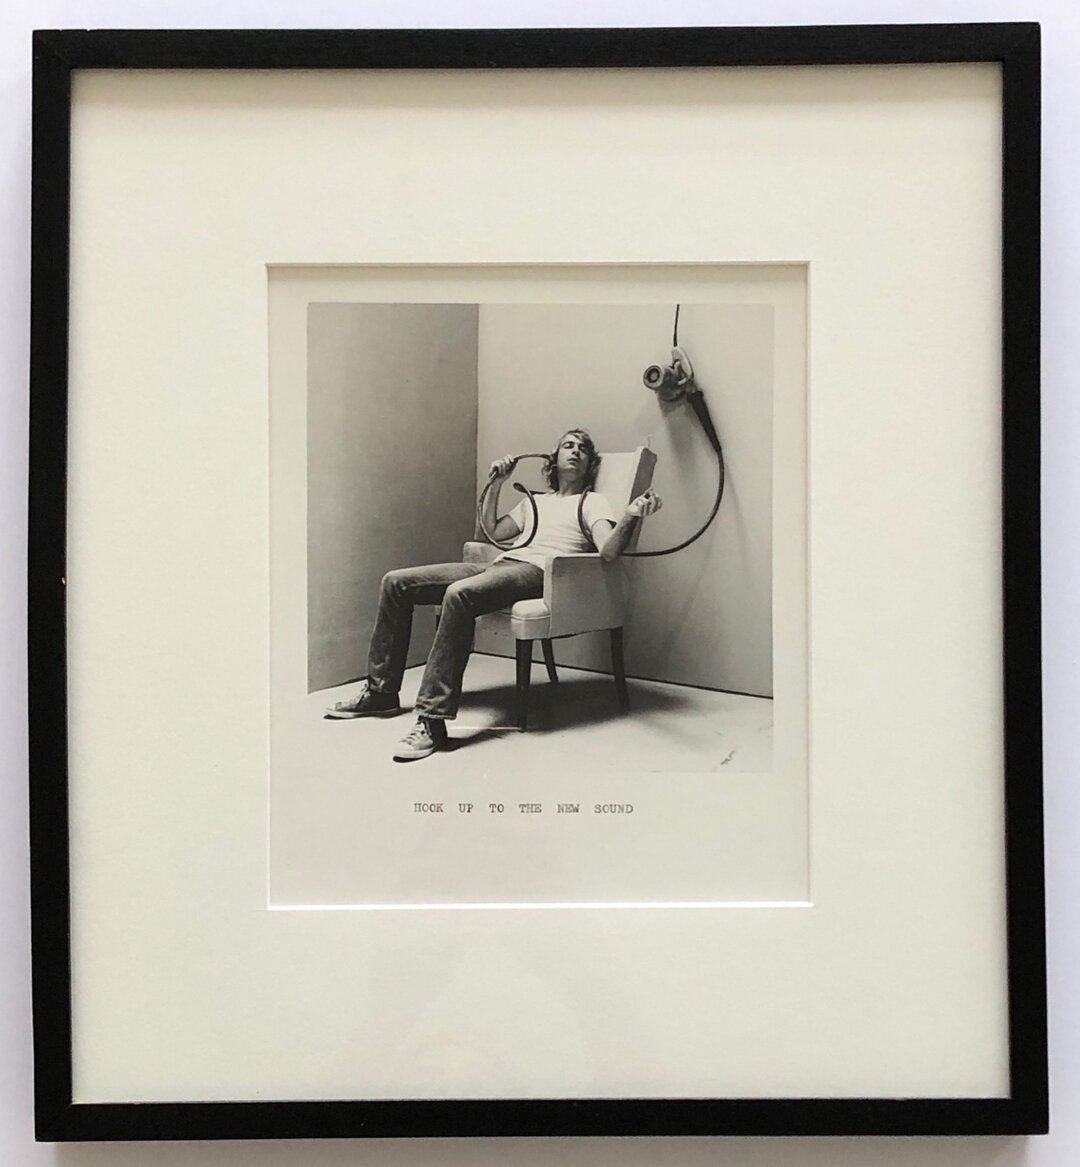 Visit us this week at the Felix Art Fair, Room 1102​​​​​​​​
@felixartfair​​​​​​​​
​​​​​​​​
William Wegman​​​​​​​​
Hook Up to the New Sound​​​​​​​​
1971​​​​​​​​
gelatin silver print​​​​​​​​
16 1/4 x 15 inches (framed)​​​​​​​​
​​​​​​​​
#williamwegman #